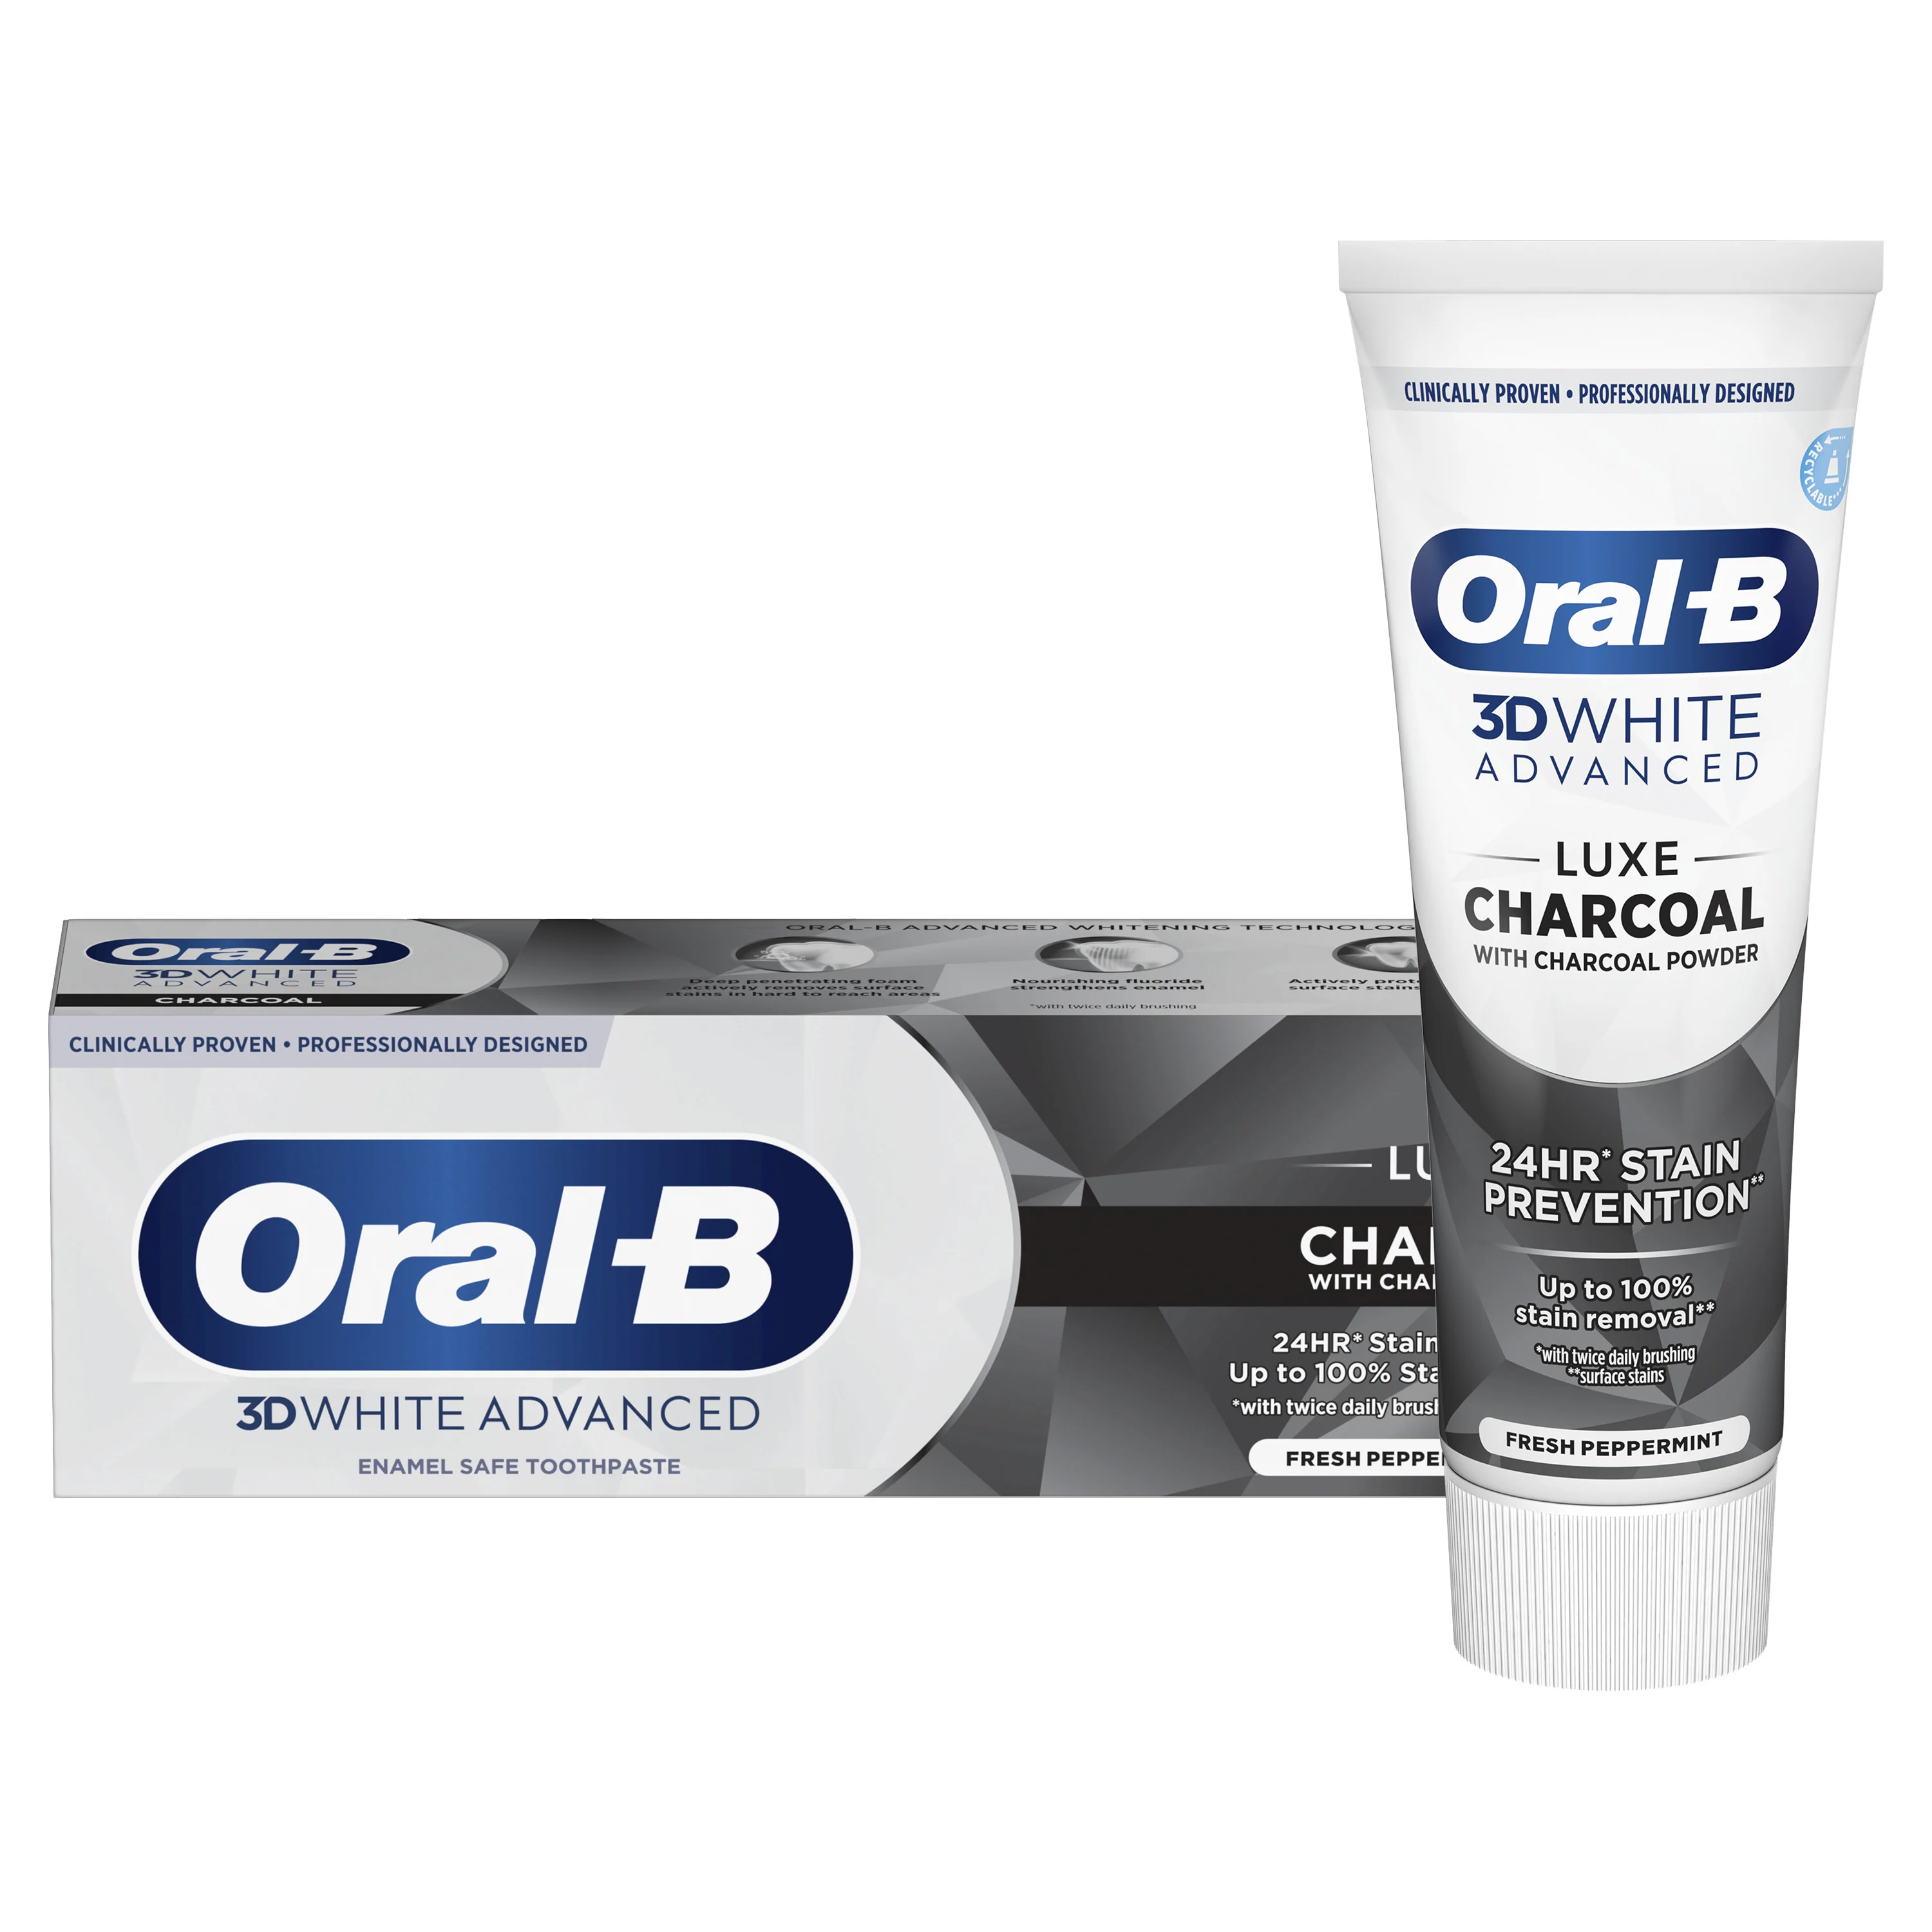 Oral-B 3DWhite Advanced Luxe Charcoal tandpasta - Main 